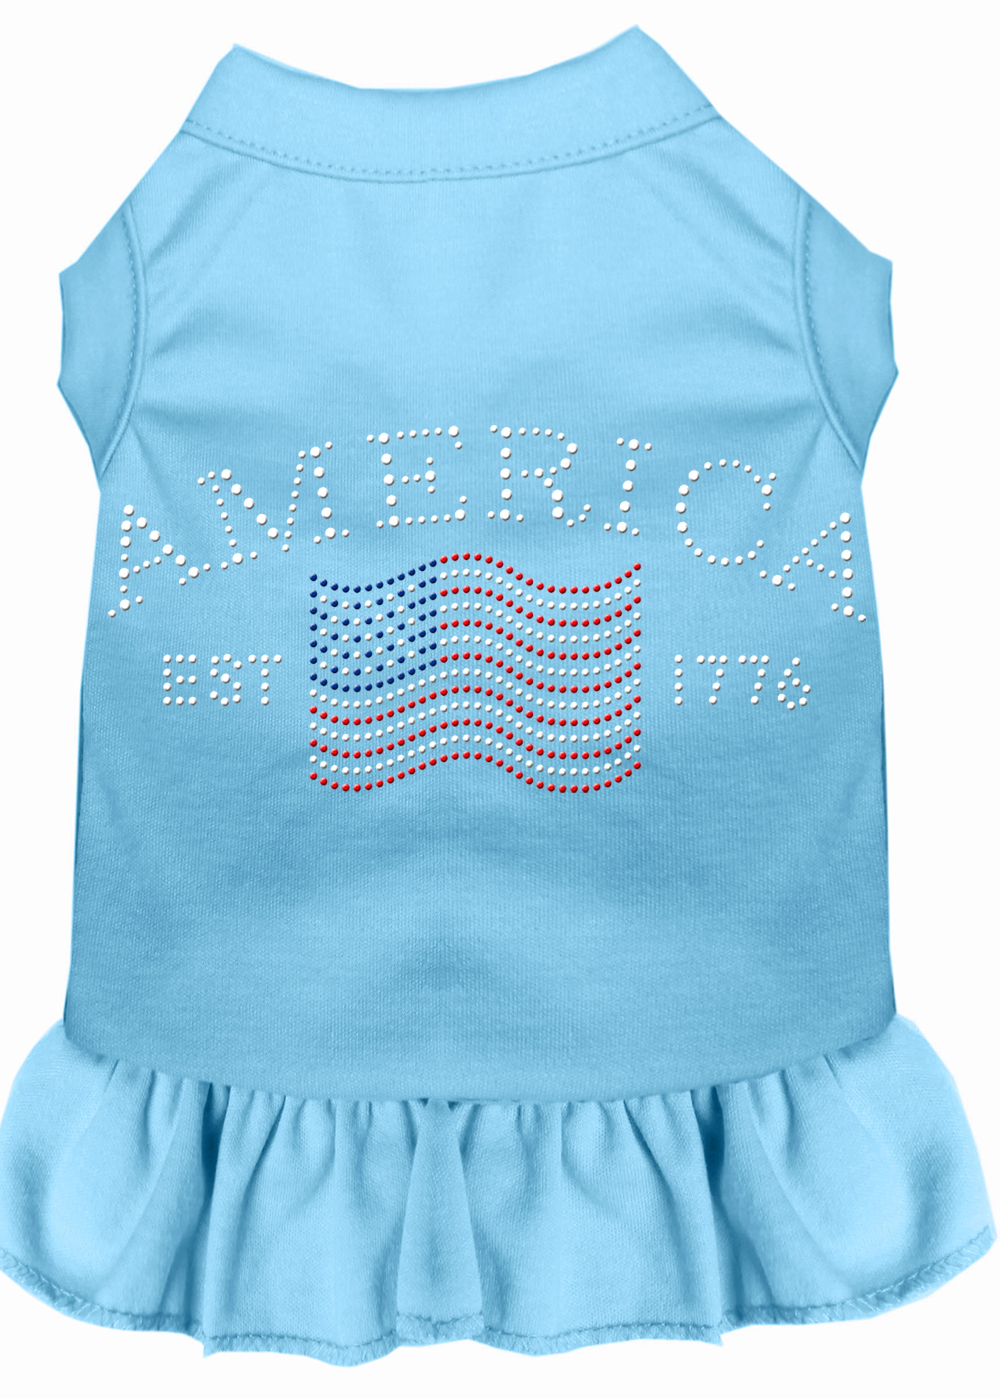 Classic America Rhinestone Dress Baby Blue Sm